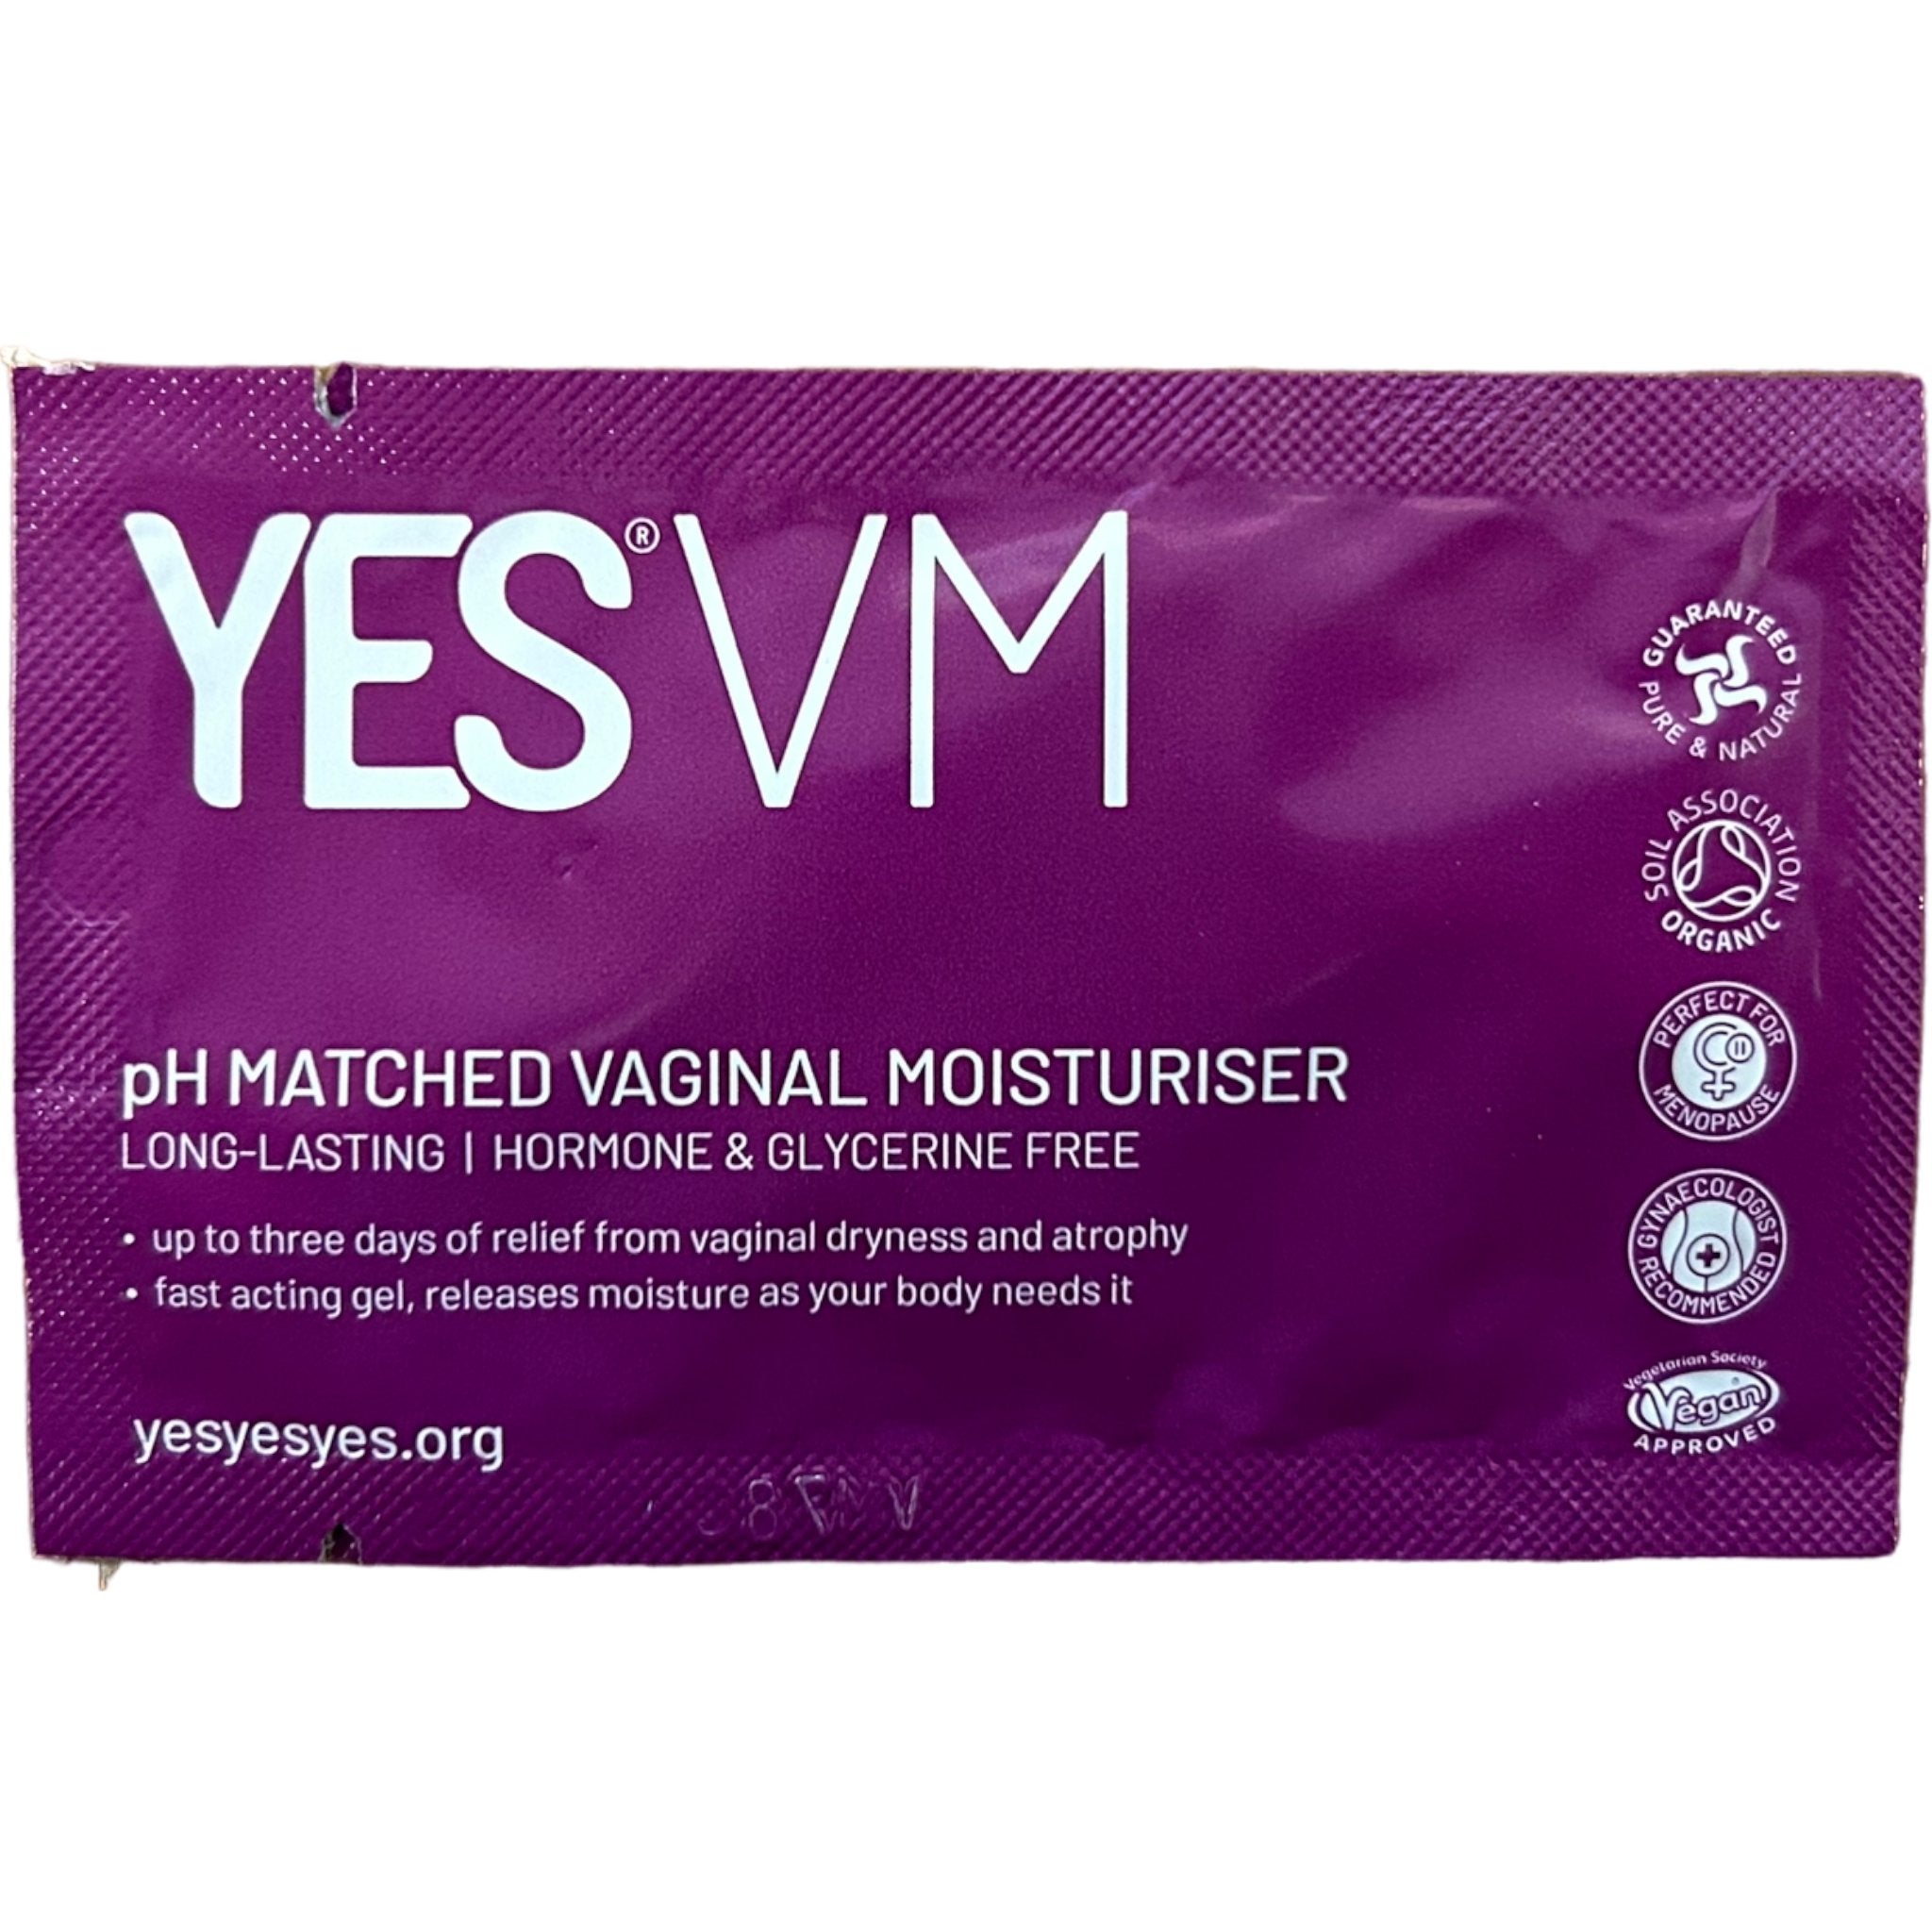 Natural Vaginal Moisturiser - mypure.co.uk